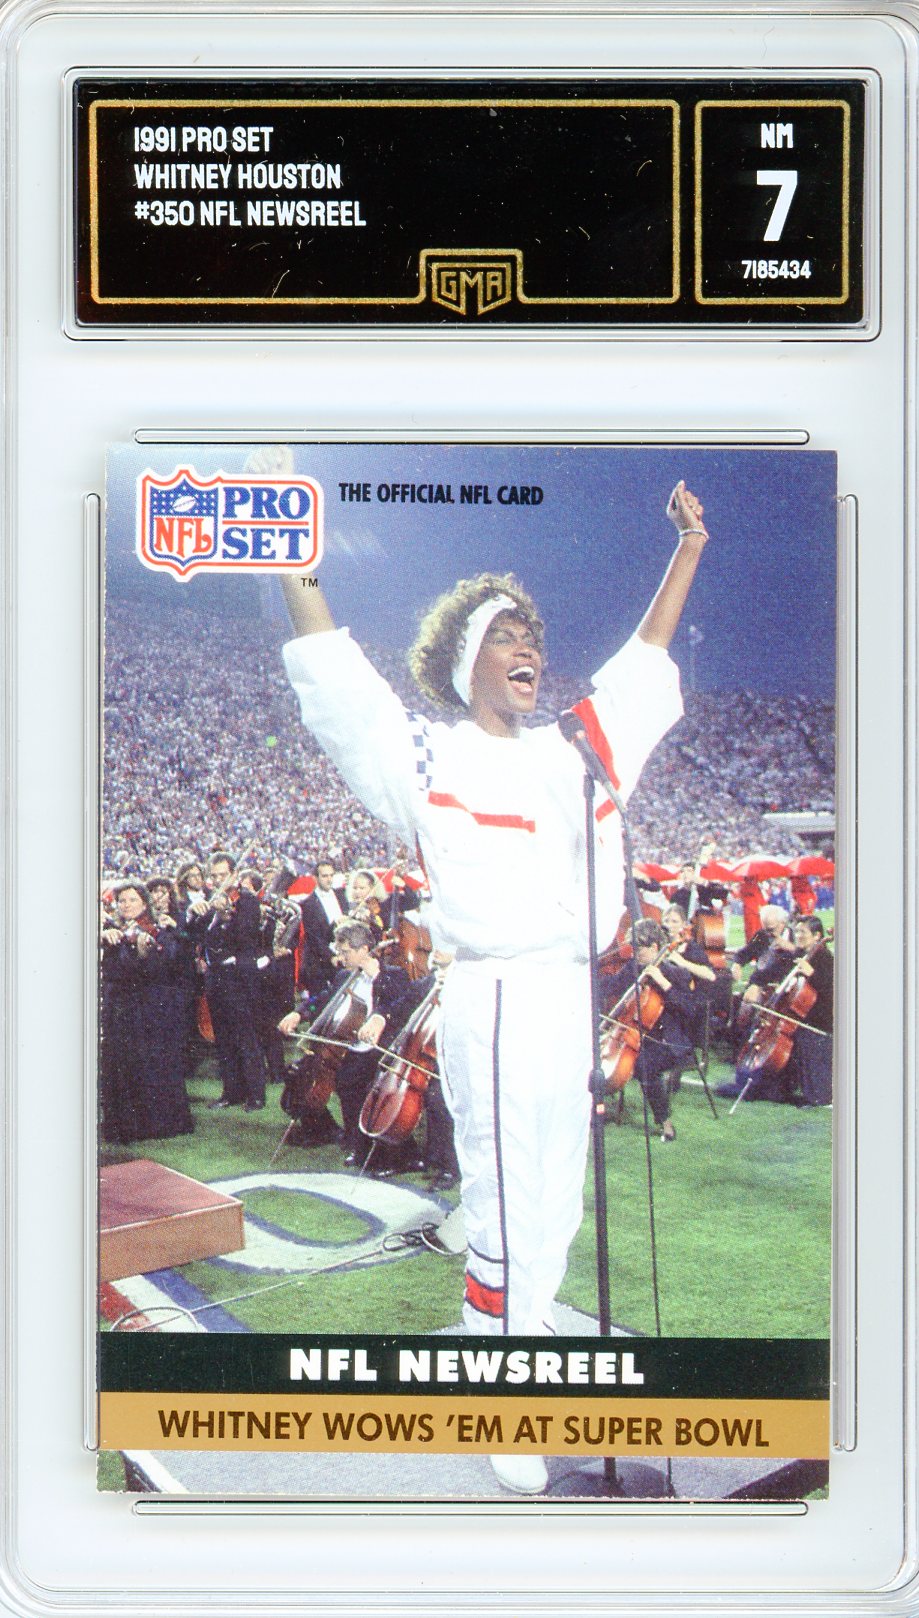 1991 Pro Set Whitney Houston #350 NFL Newsreel GMA 7